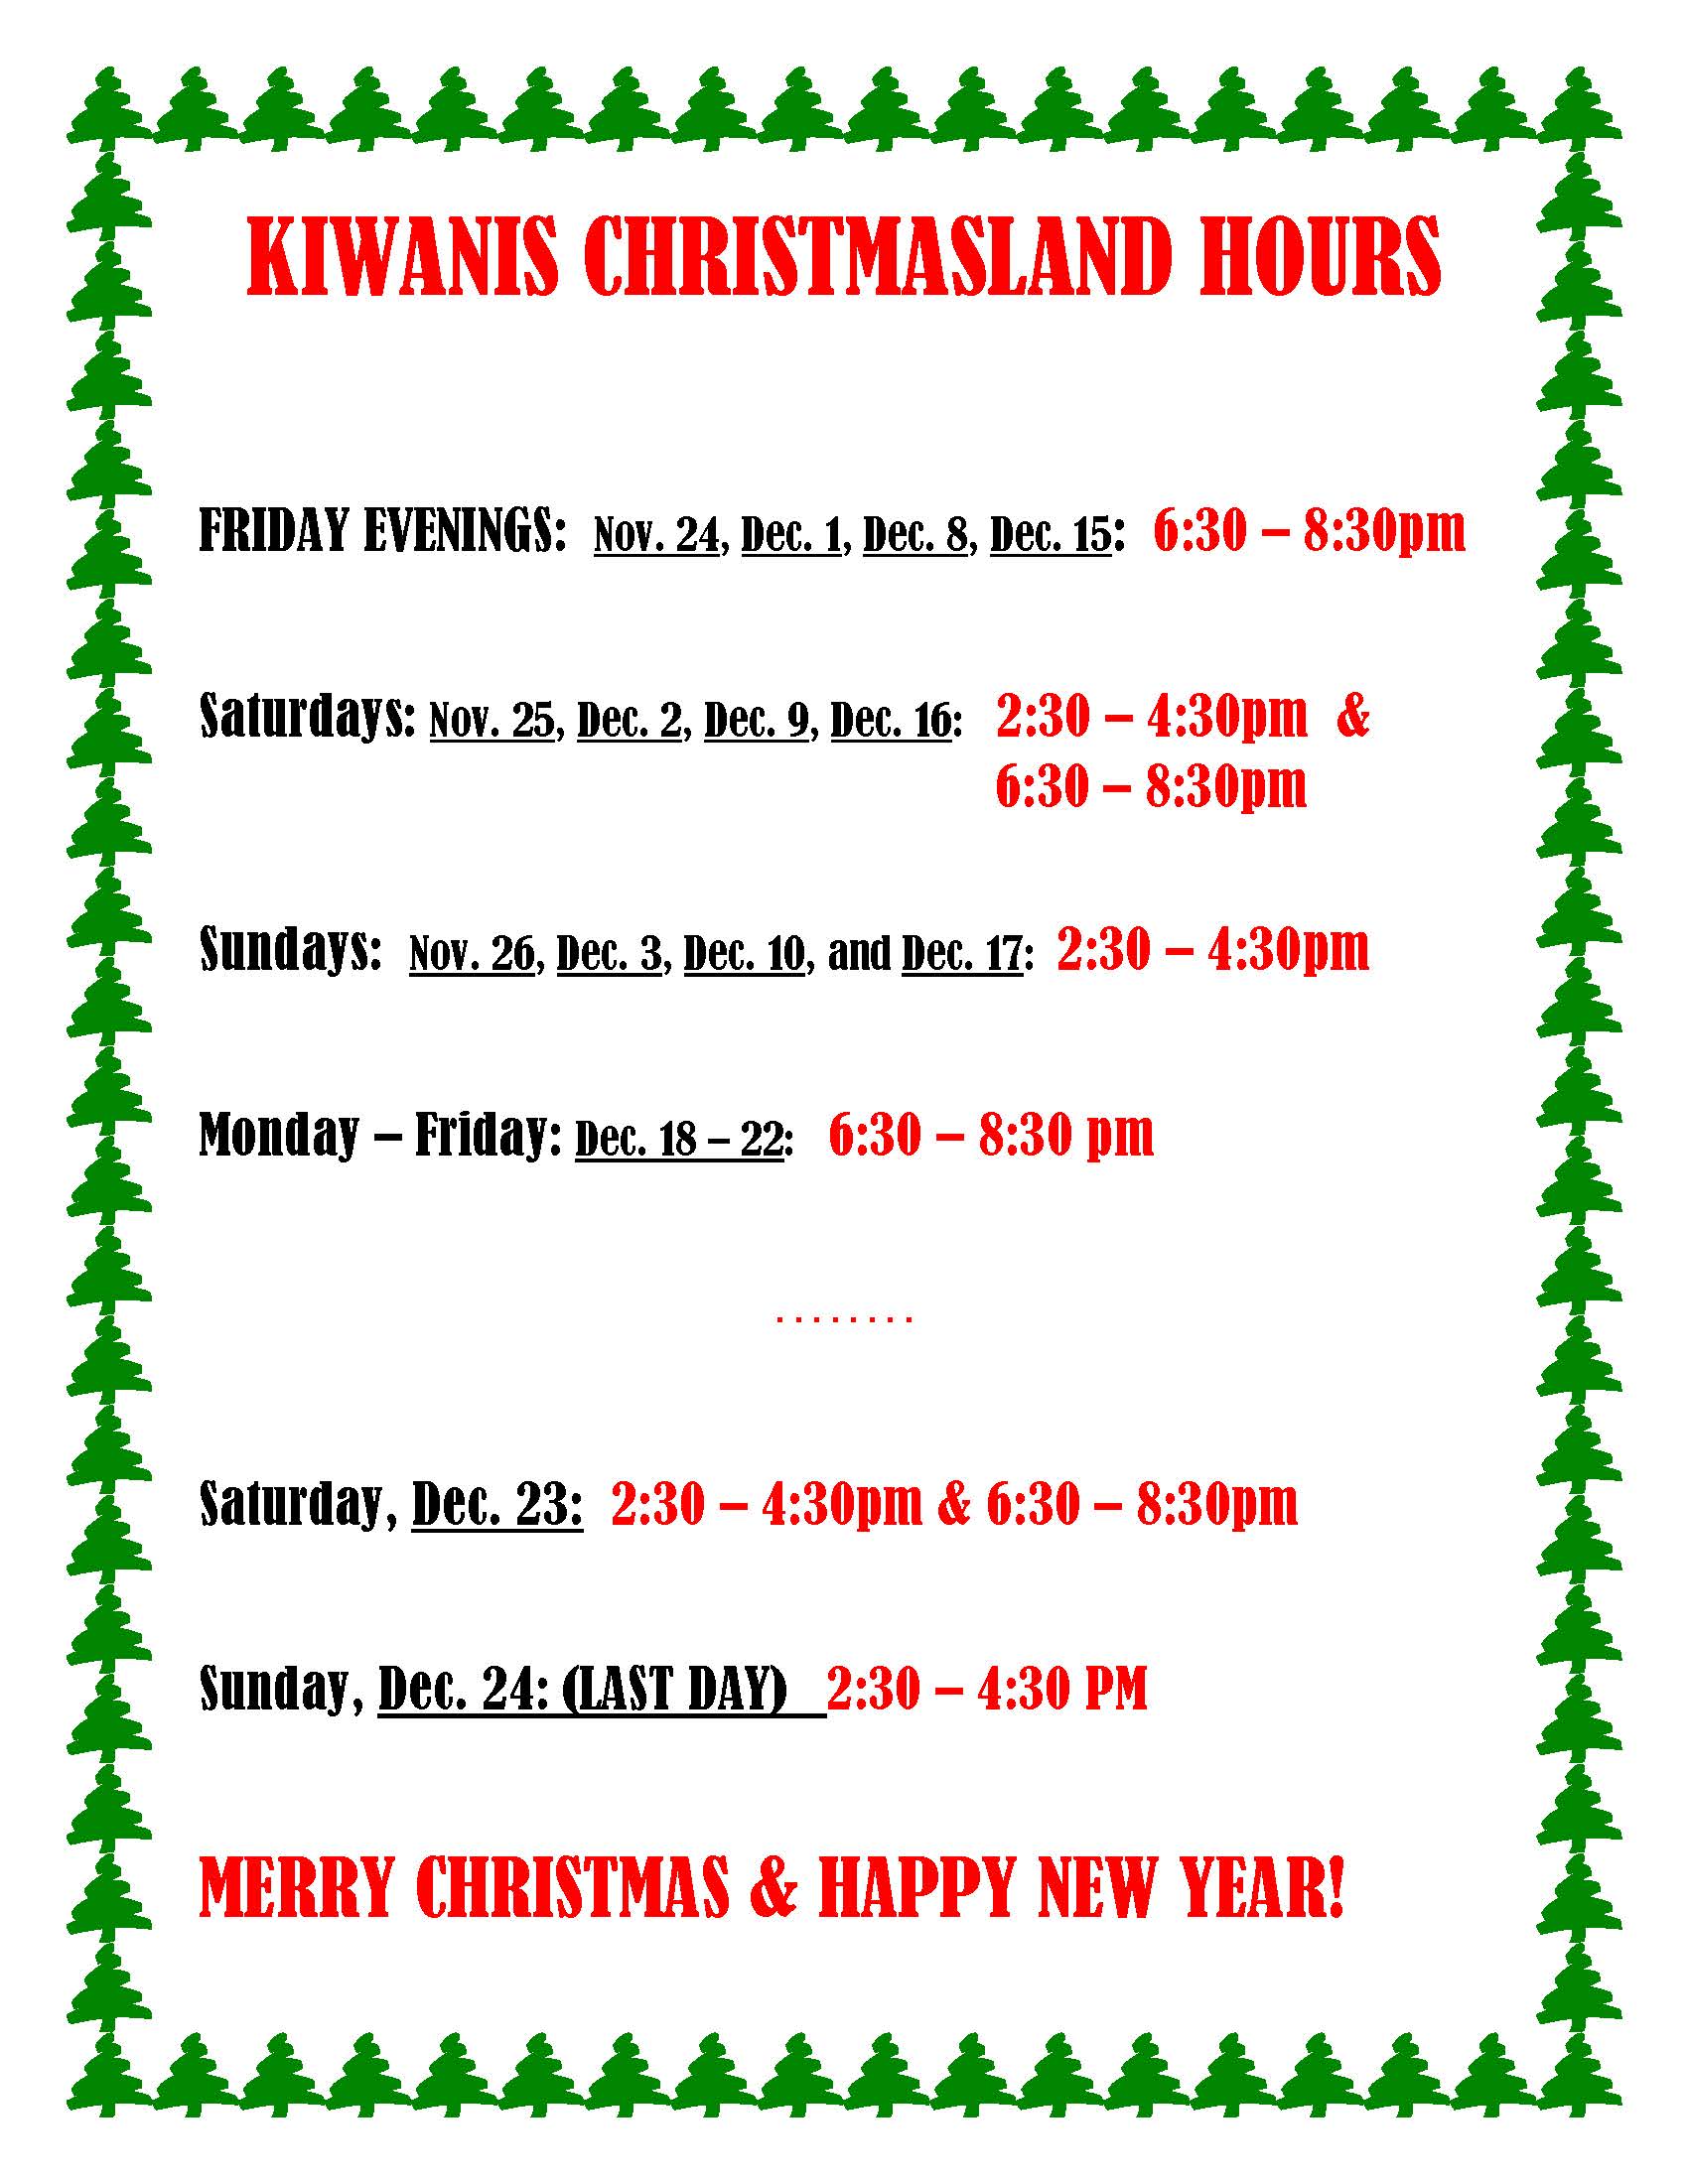 Kiwanis Christmasland